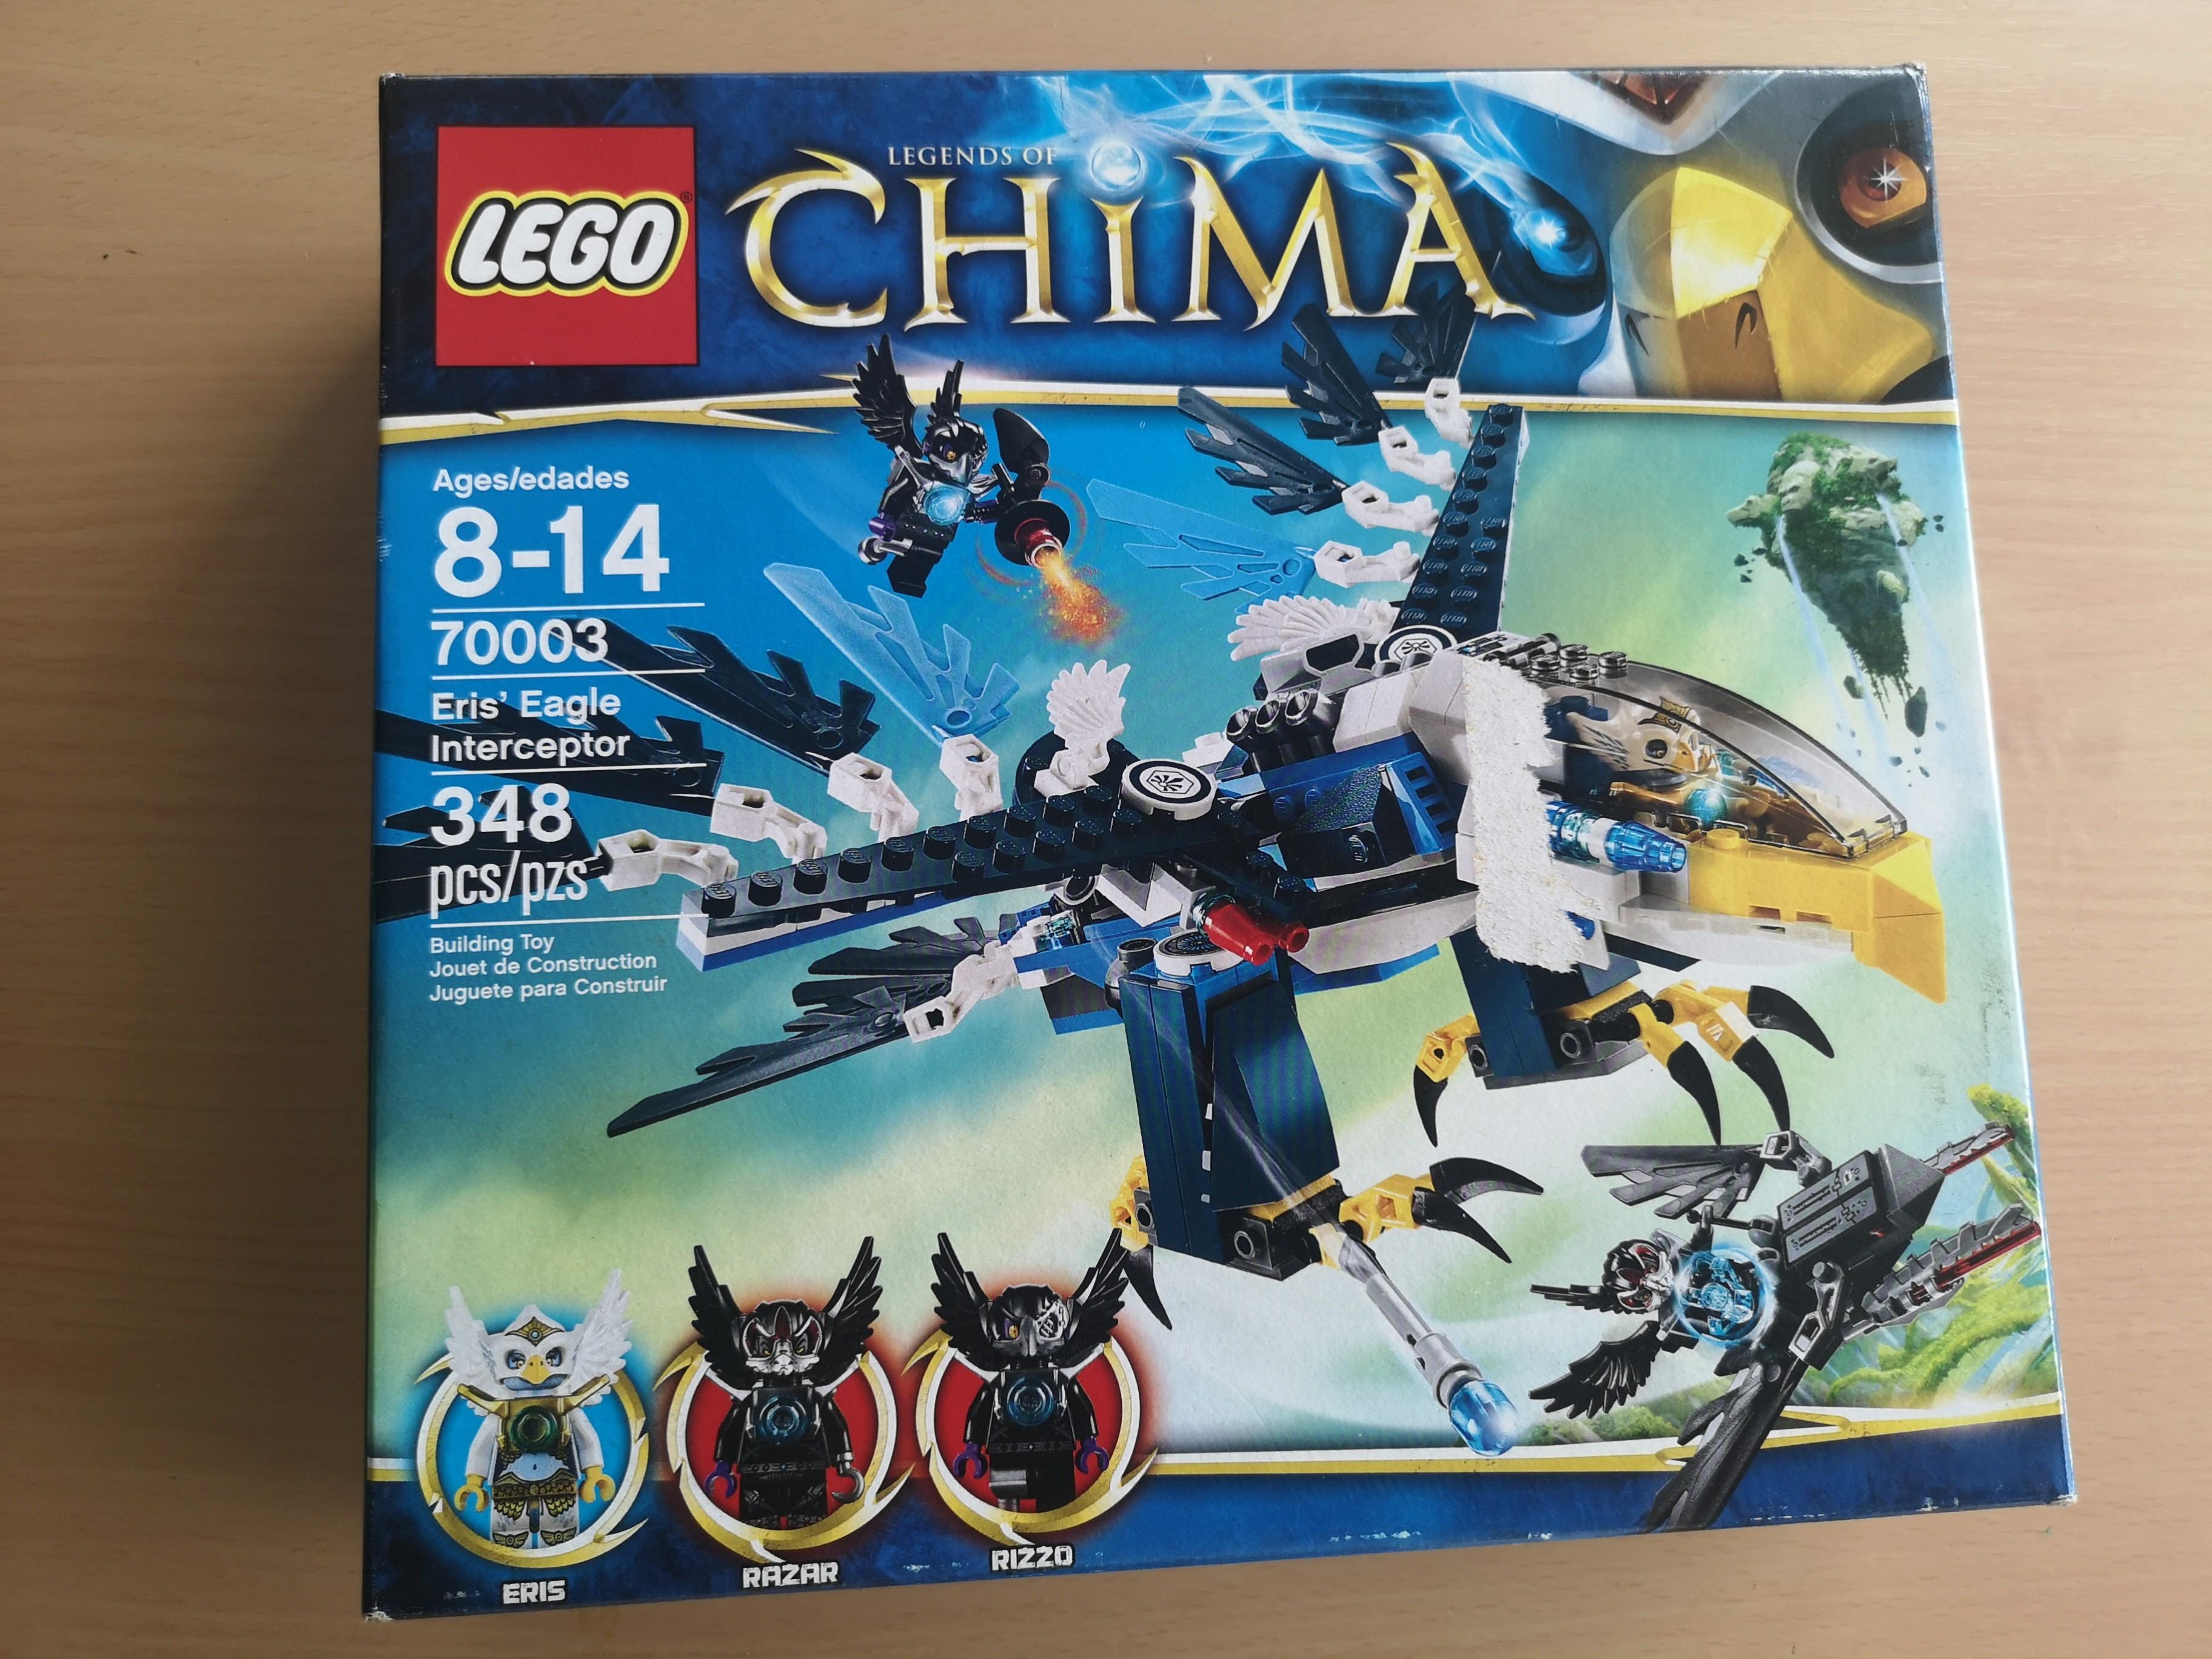 LEGO 70003 Legends of Chima Eris' Eagle Interceptor Rizzo Minifigure with Weapon 